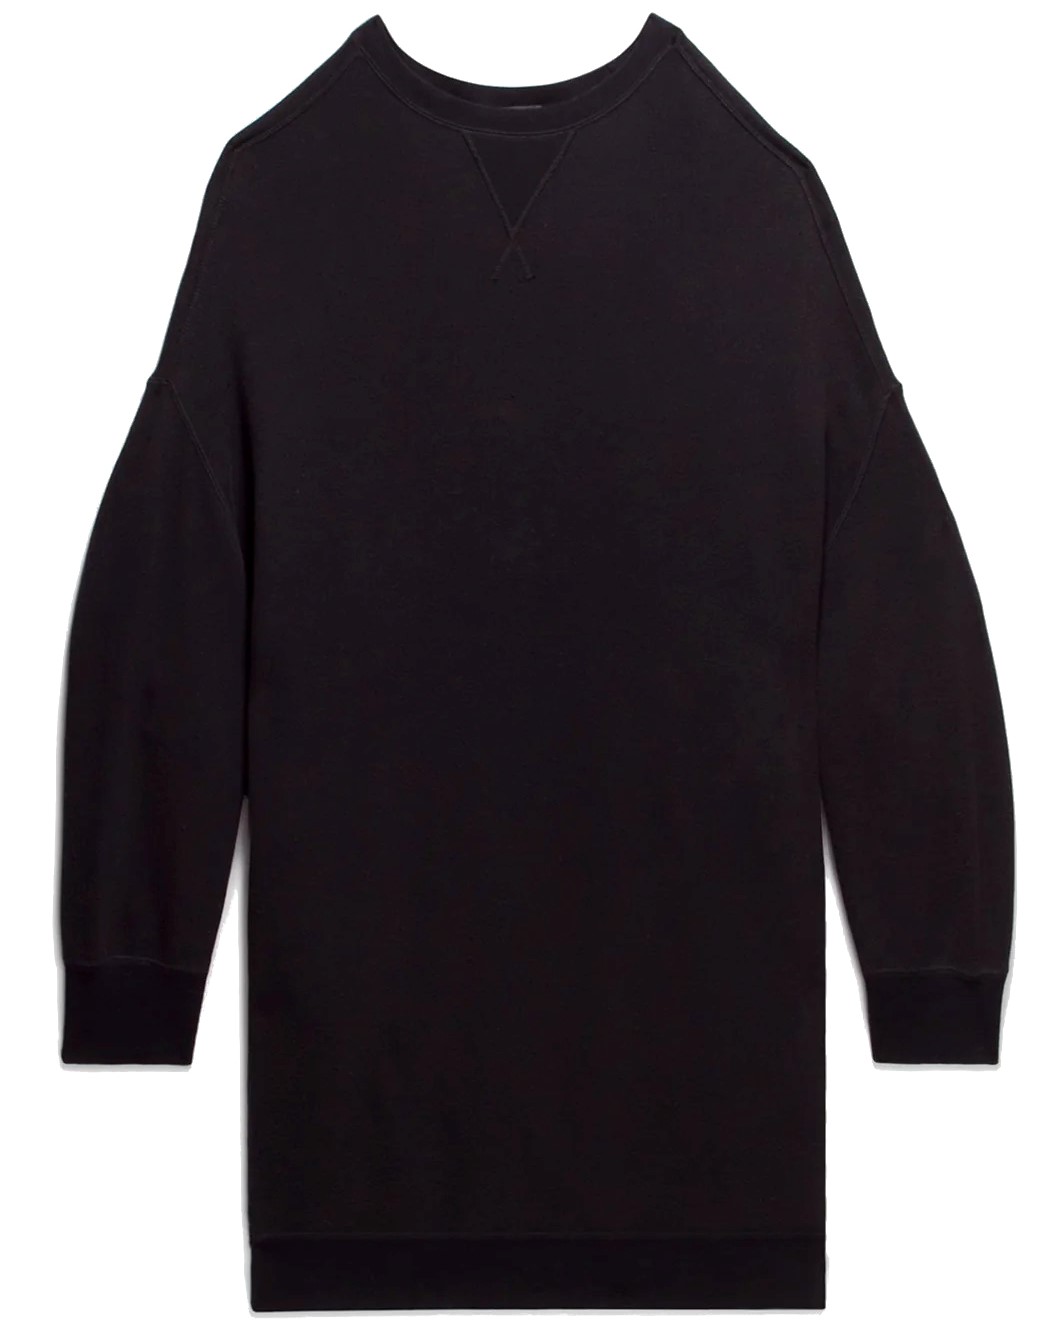 R13 Grunge Oversize Sweatshirt in Washed Black XS